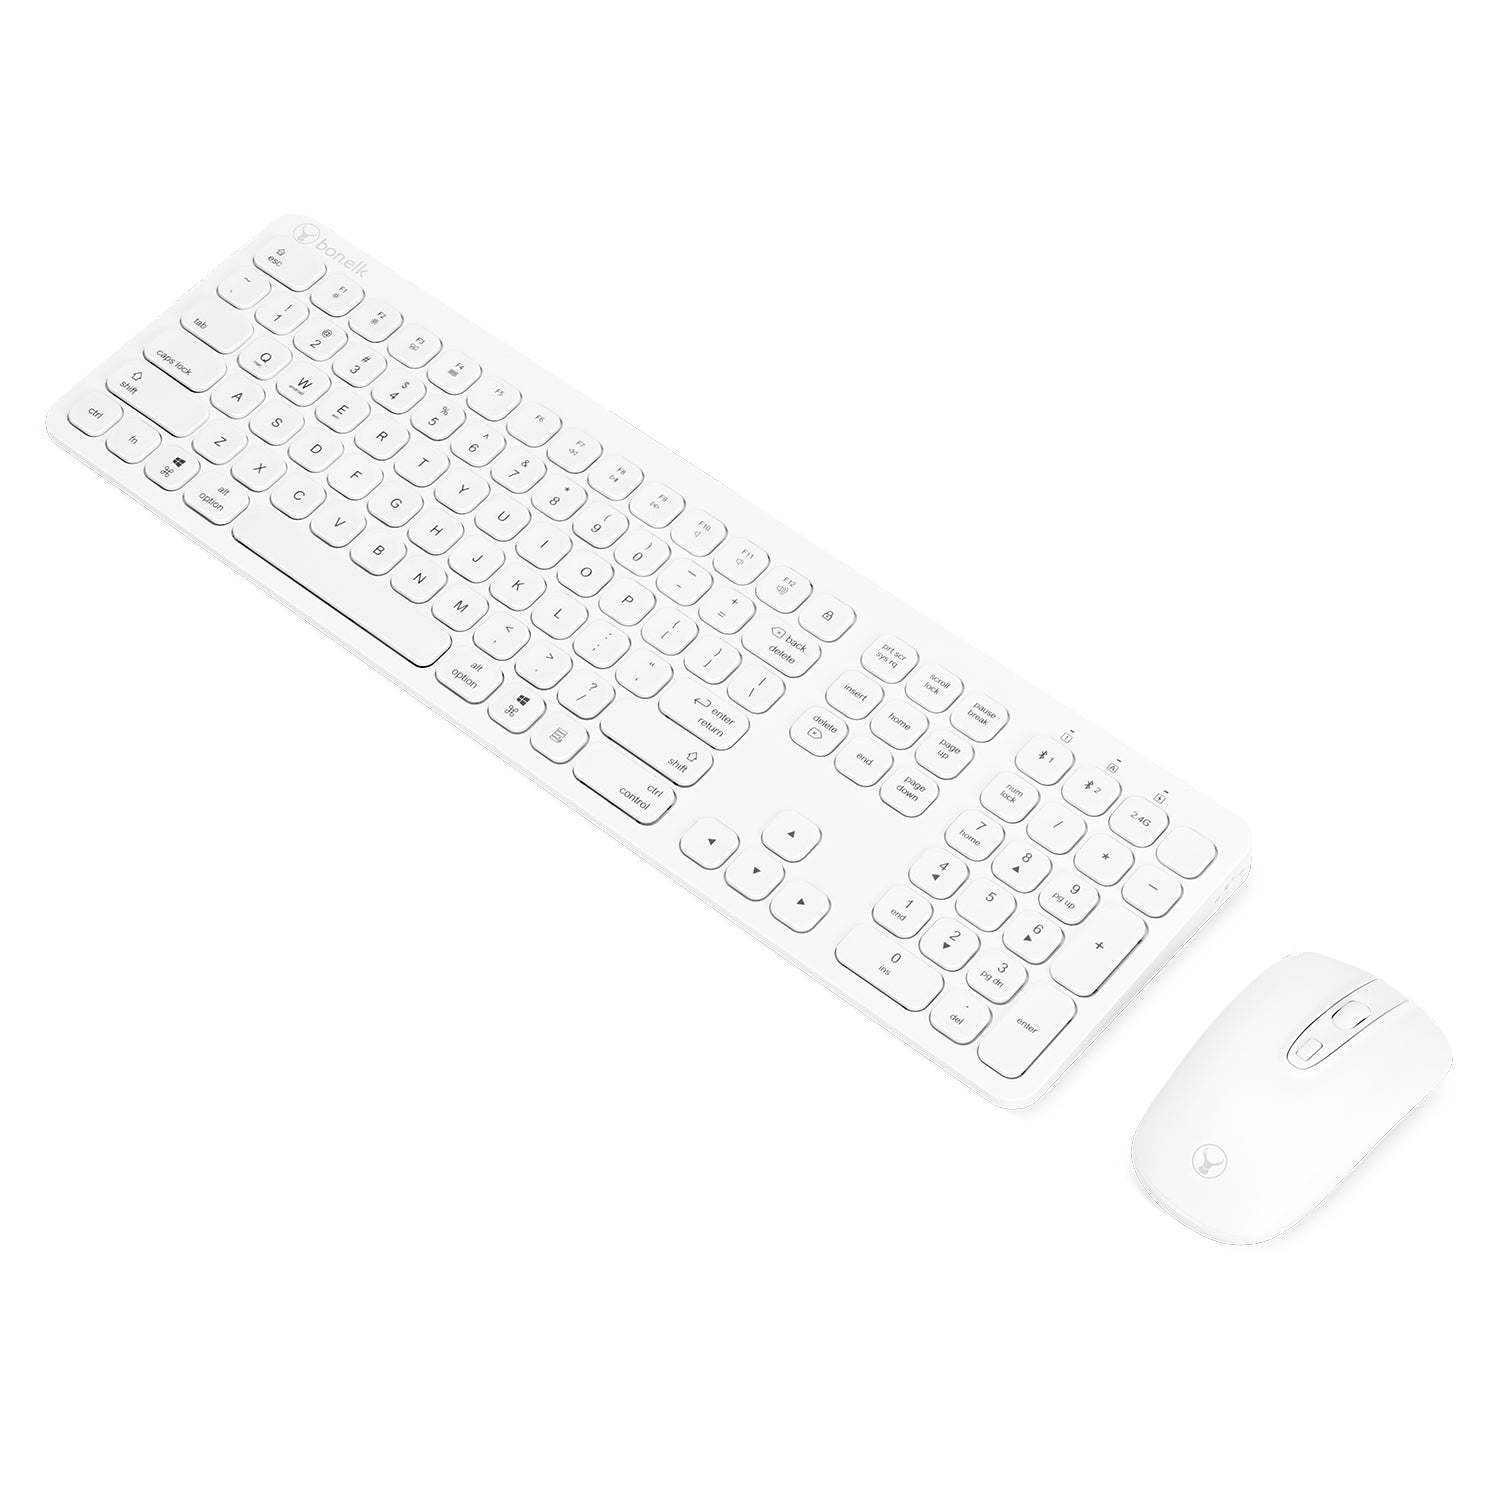 Bonelk KM-447 Slim Wireless Keyboard and Mouse Combo